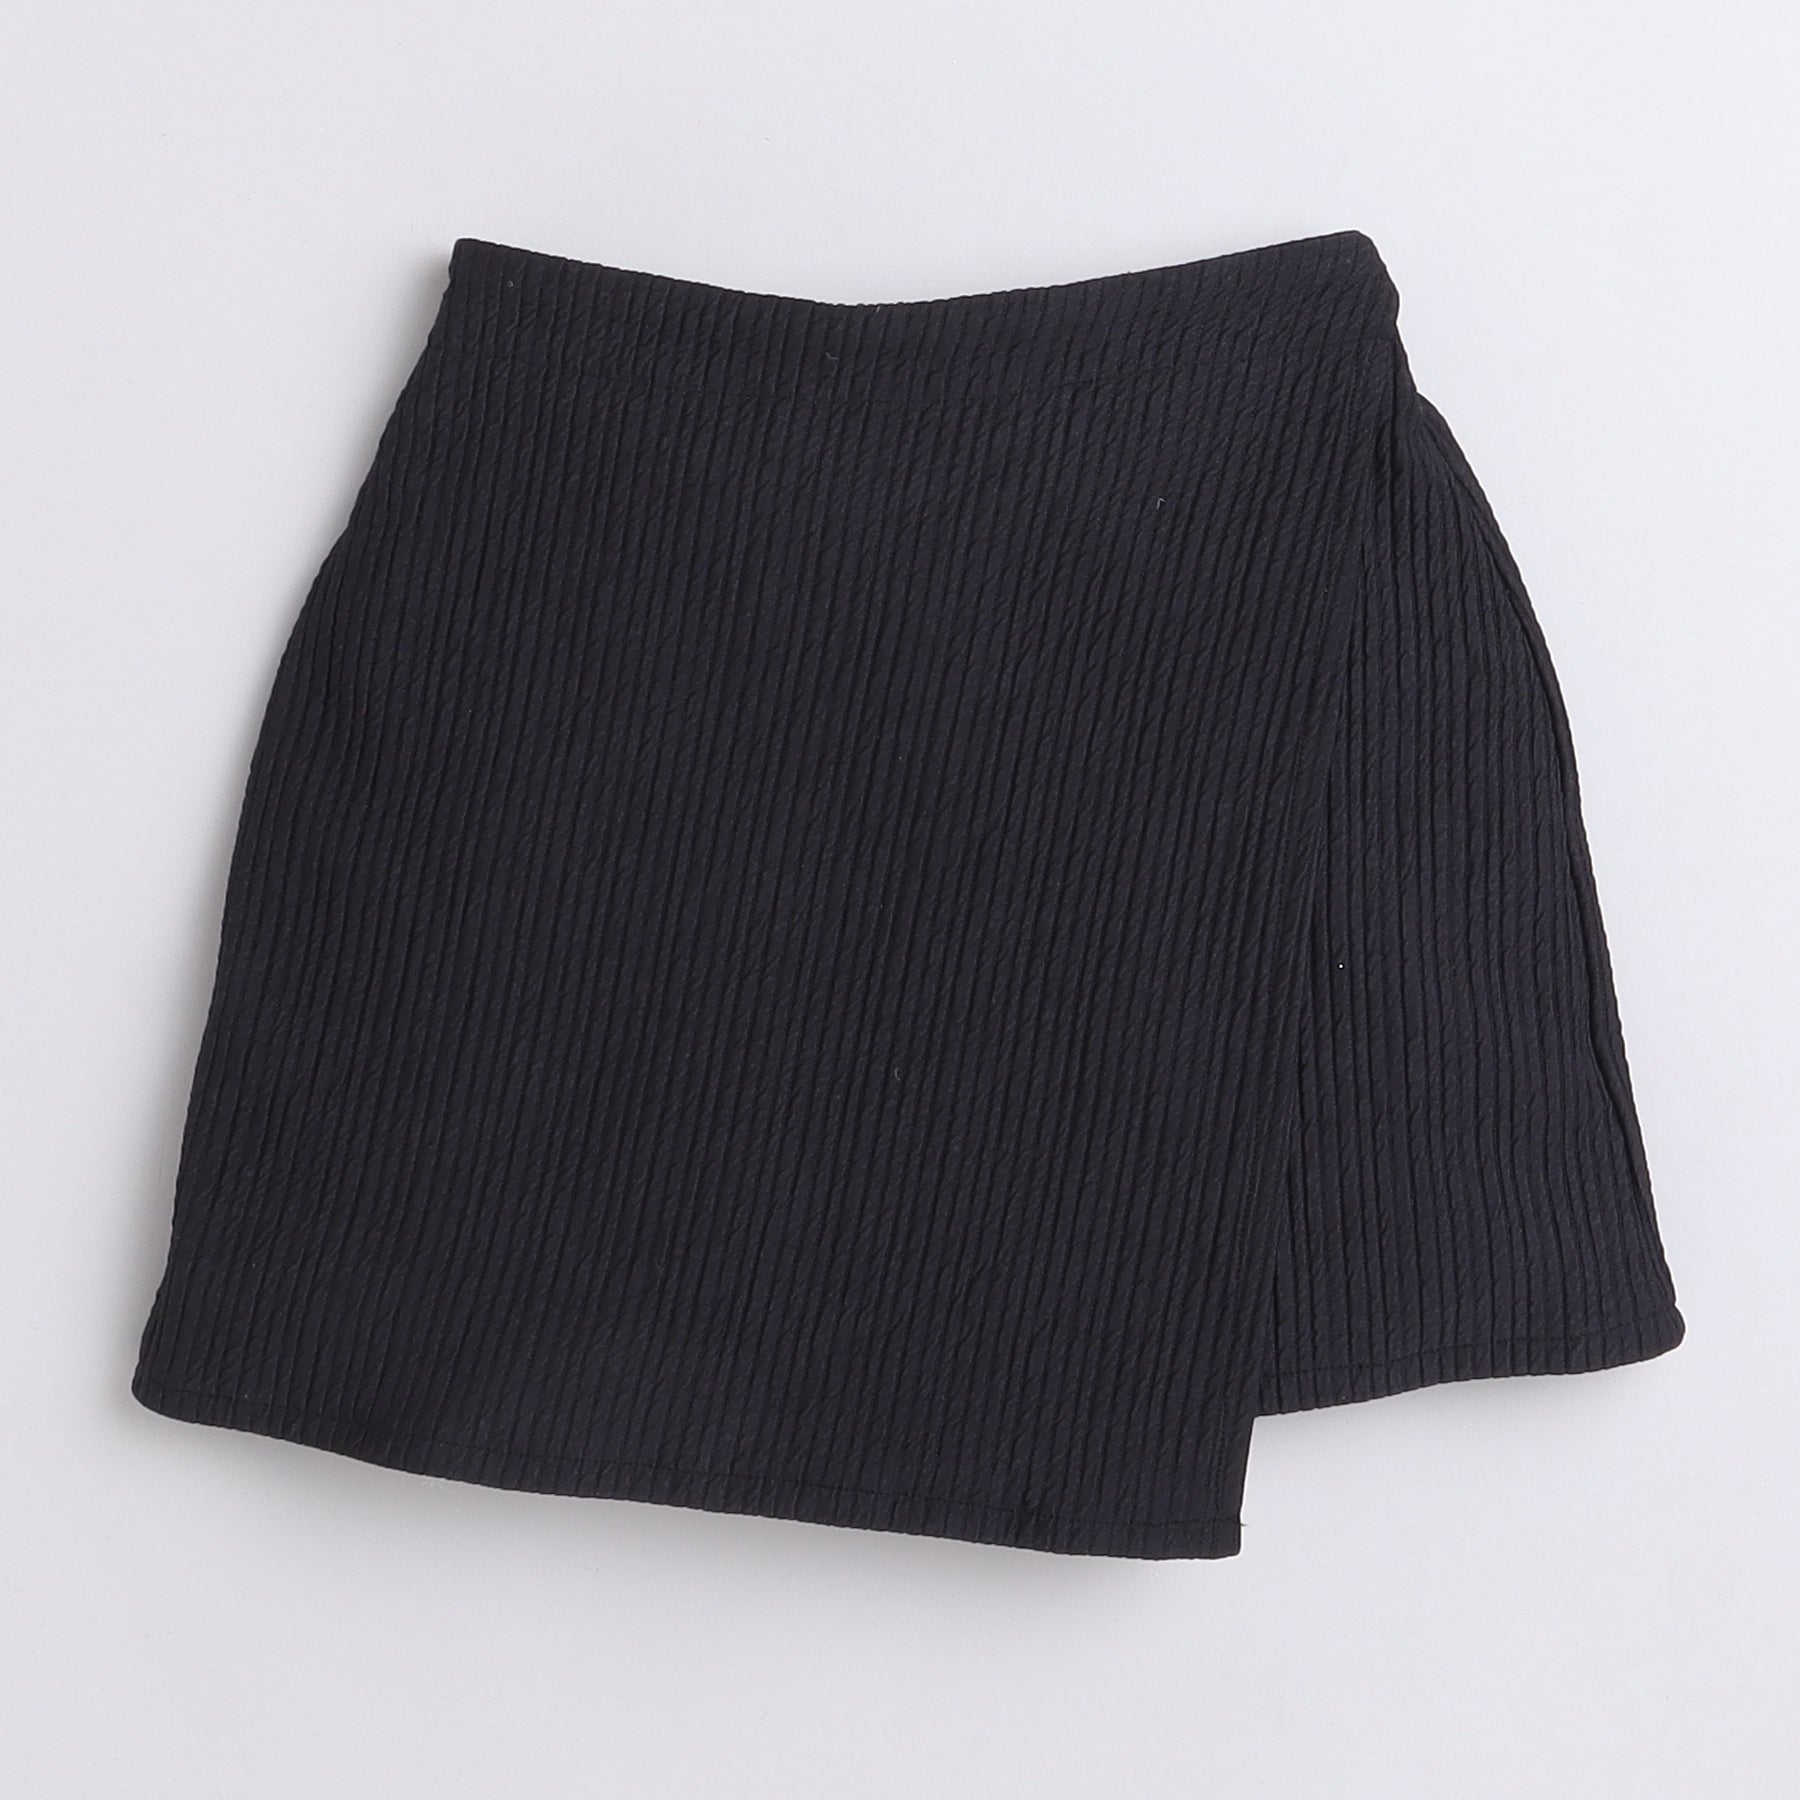 Sleeveless asymmetric crop top and stripes texture skirt set-Purple/Black